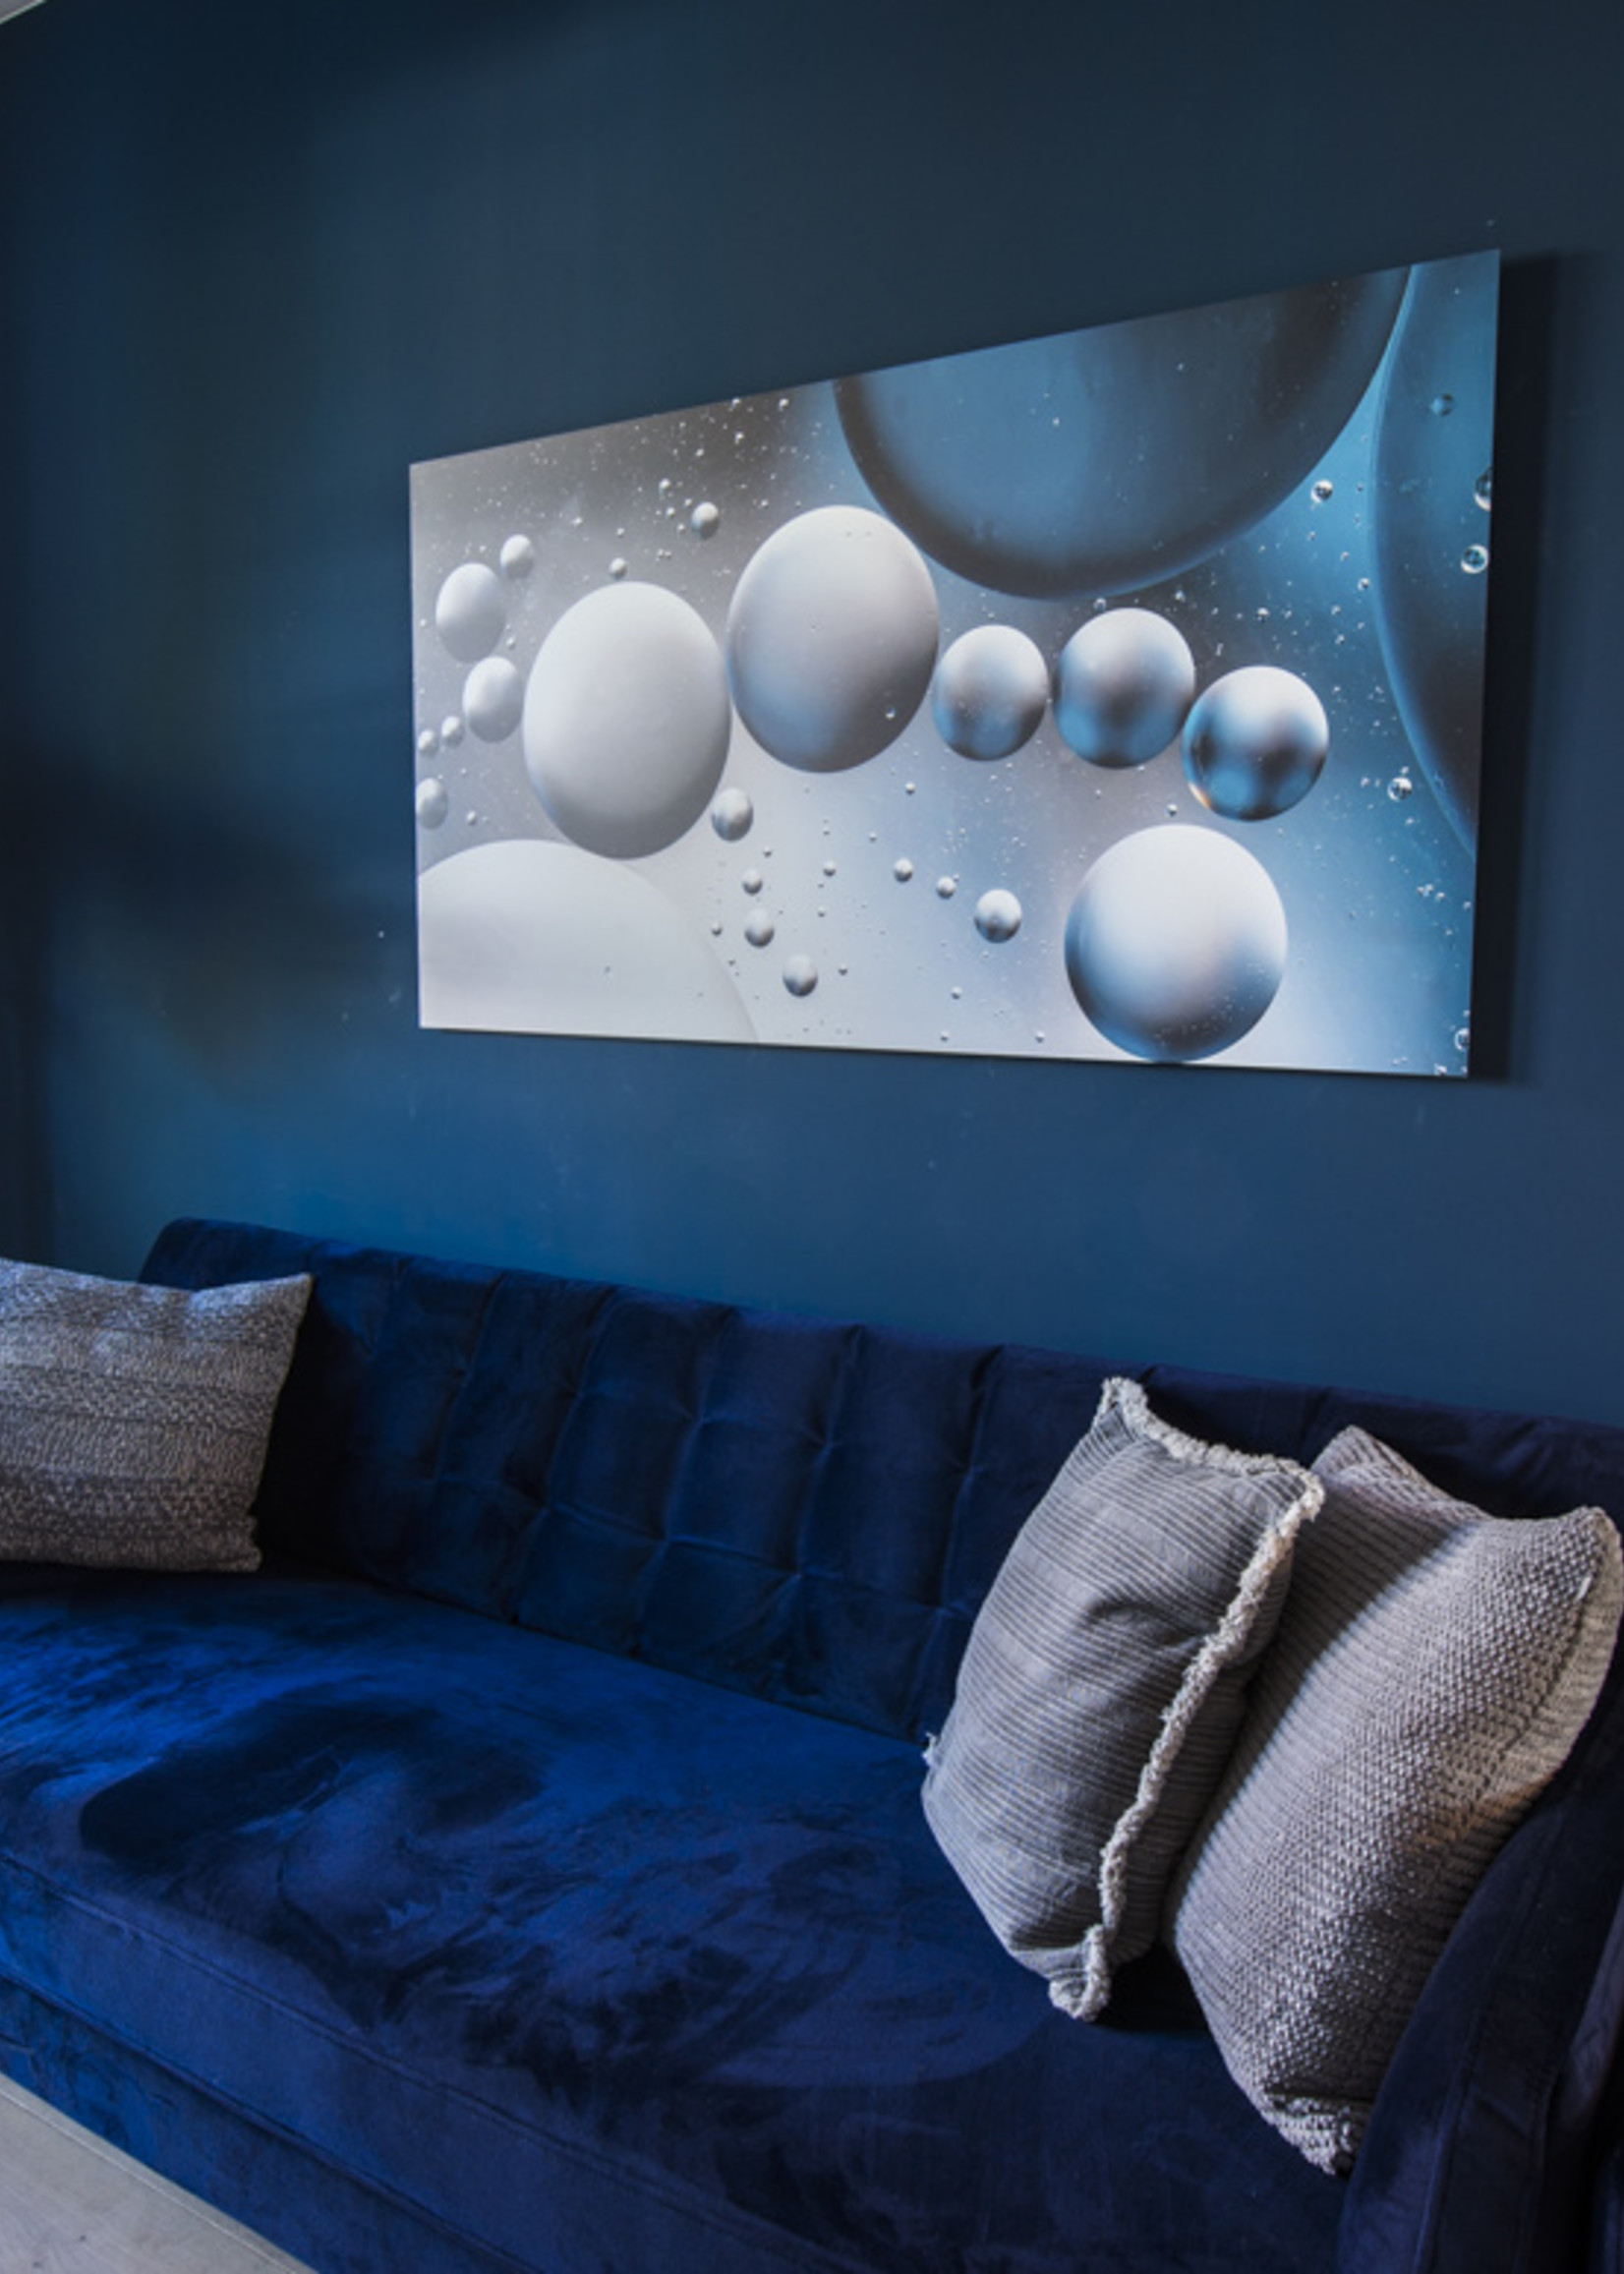 Frans van Steijn Wall photo "Crystal Sky" Aluminum on Dibond 120 cm